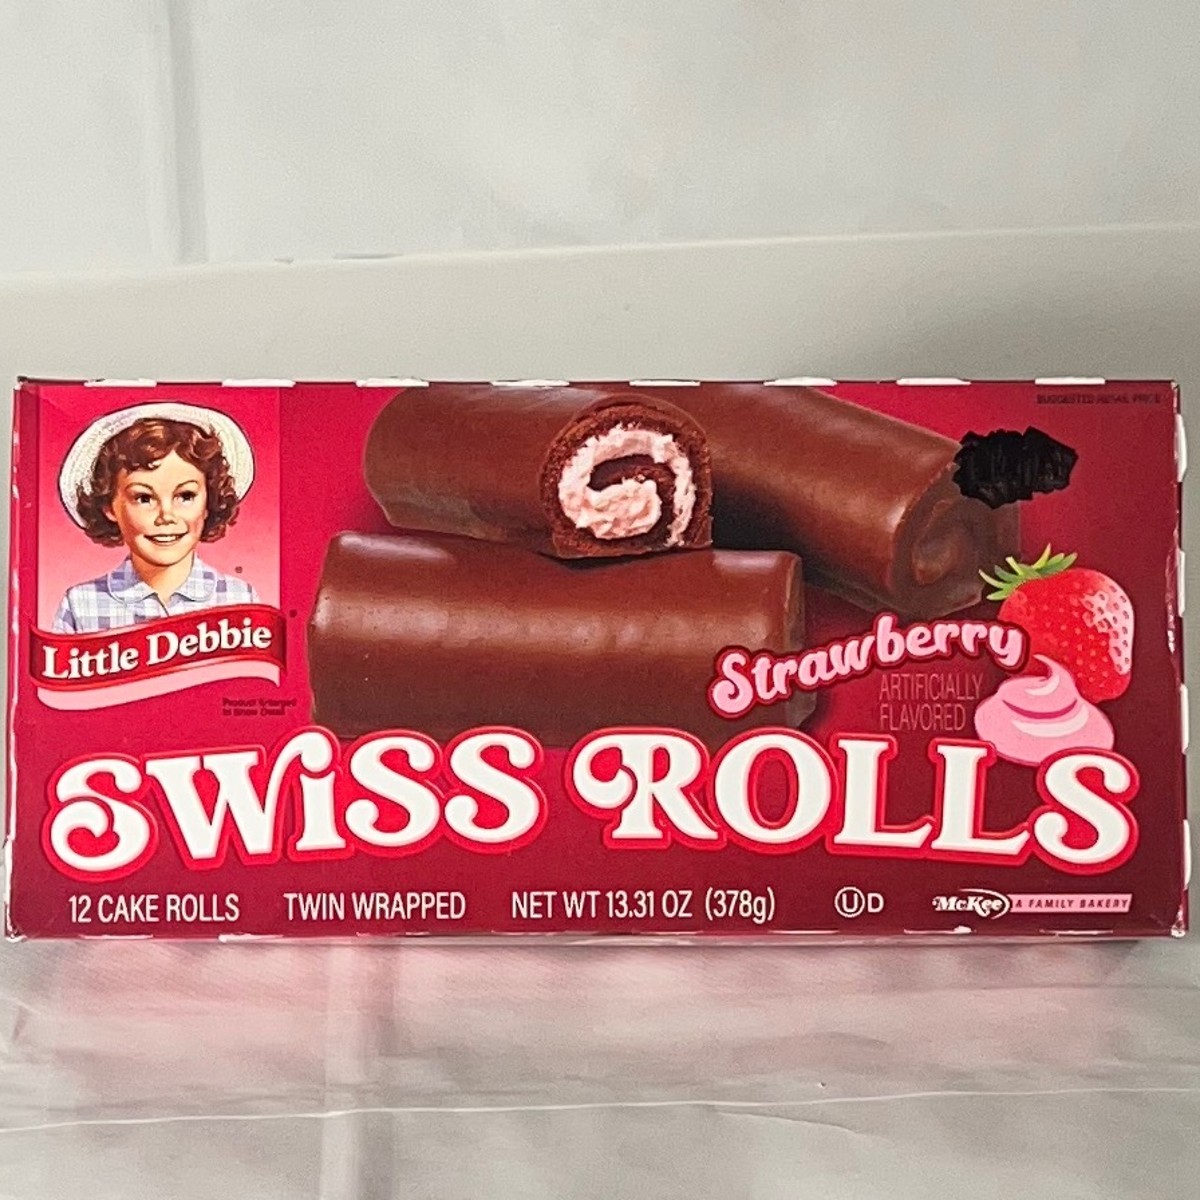 Little Debbie Swiss Rolls Ice Cream, Chocolate Cake Ice Cream with  Chocolate Cake, Pint 16 fl oz 